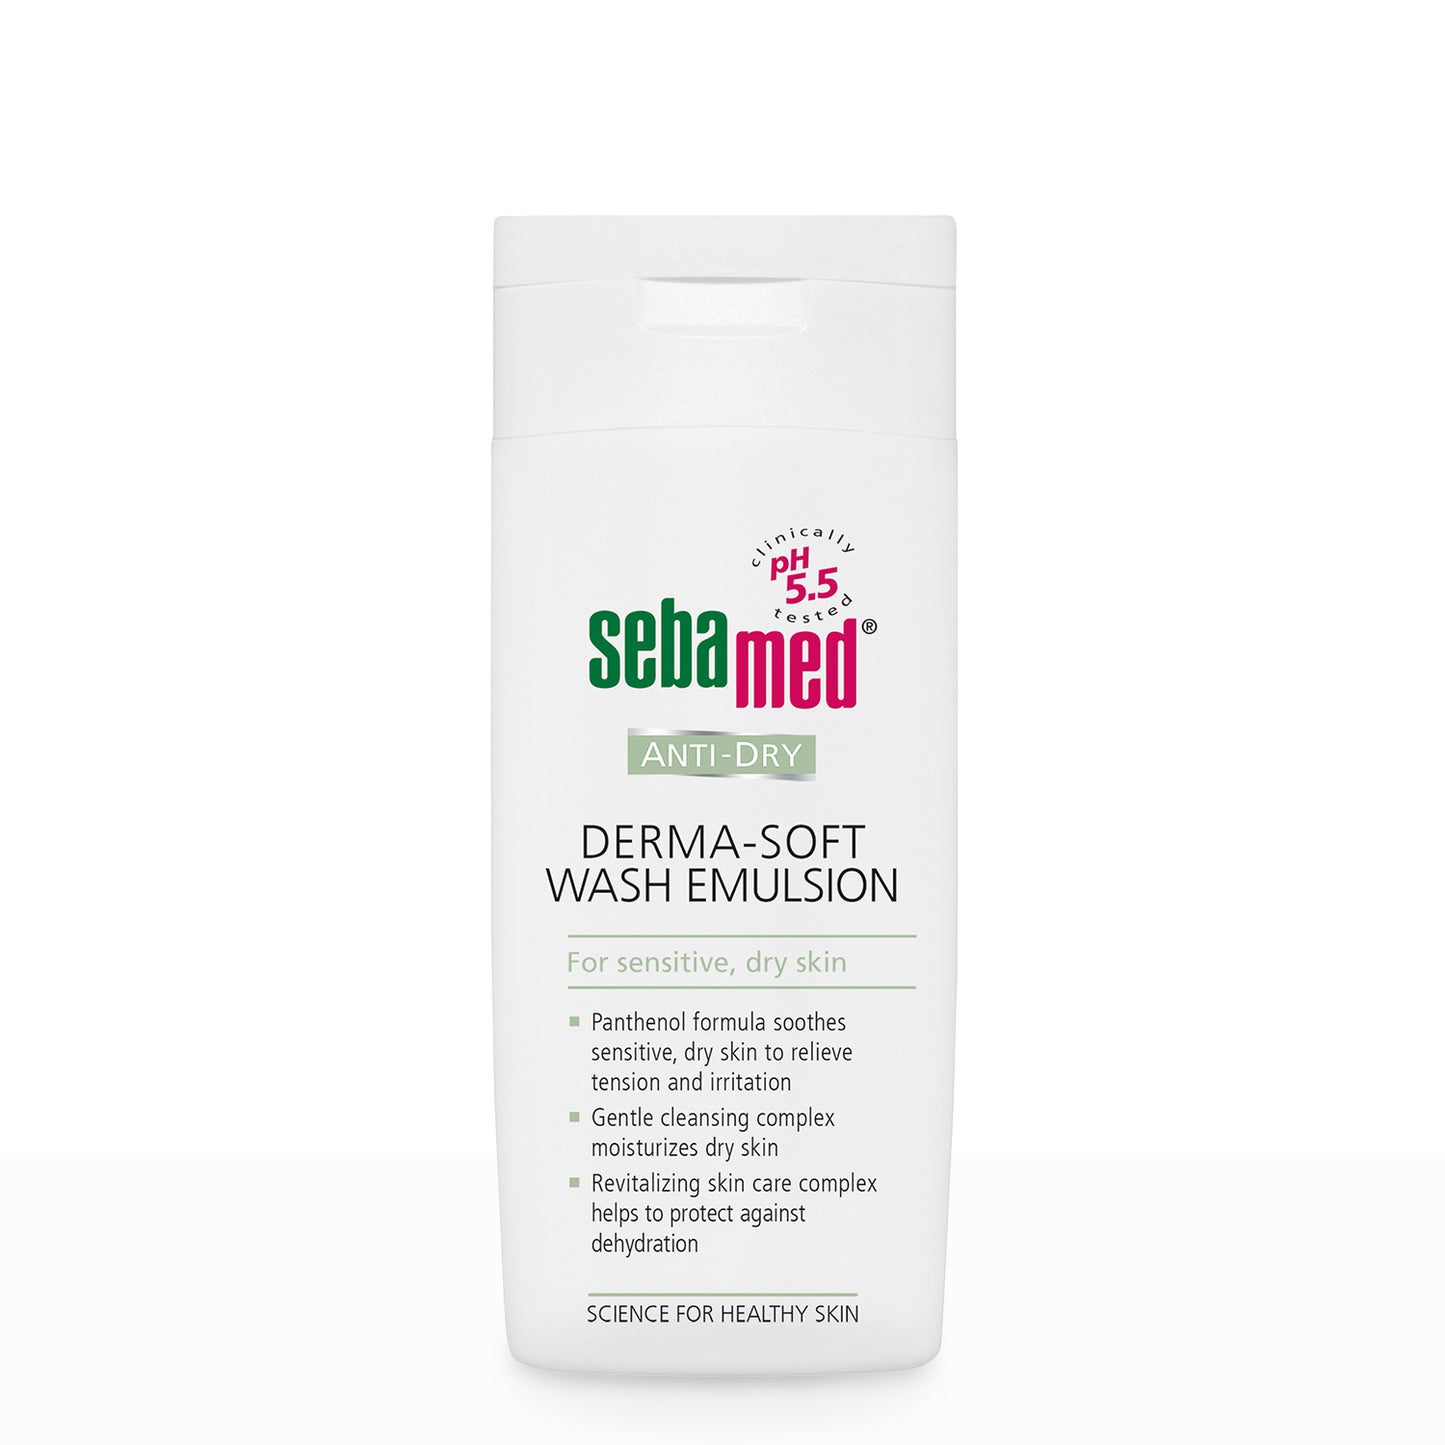 Sebamed Anti-Dry Derma-Soft Wash Emulsion 200ml